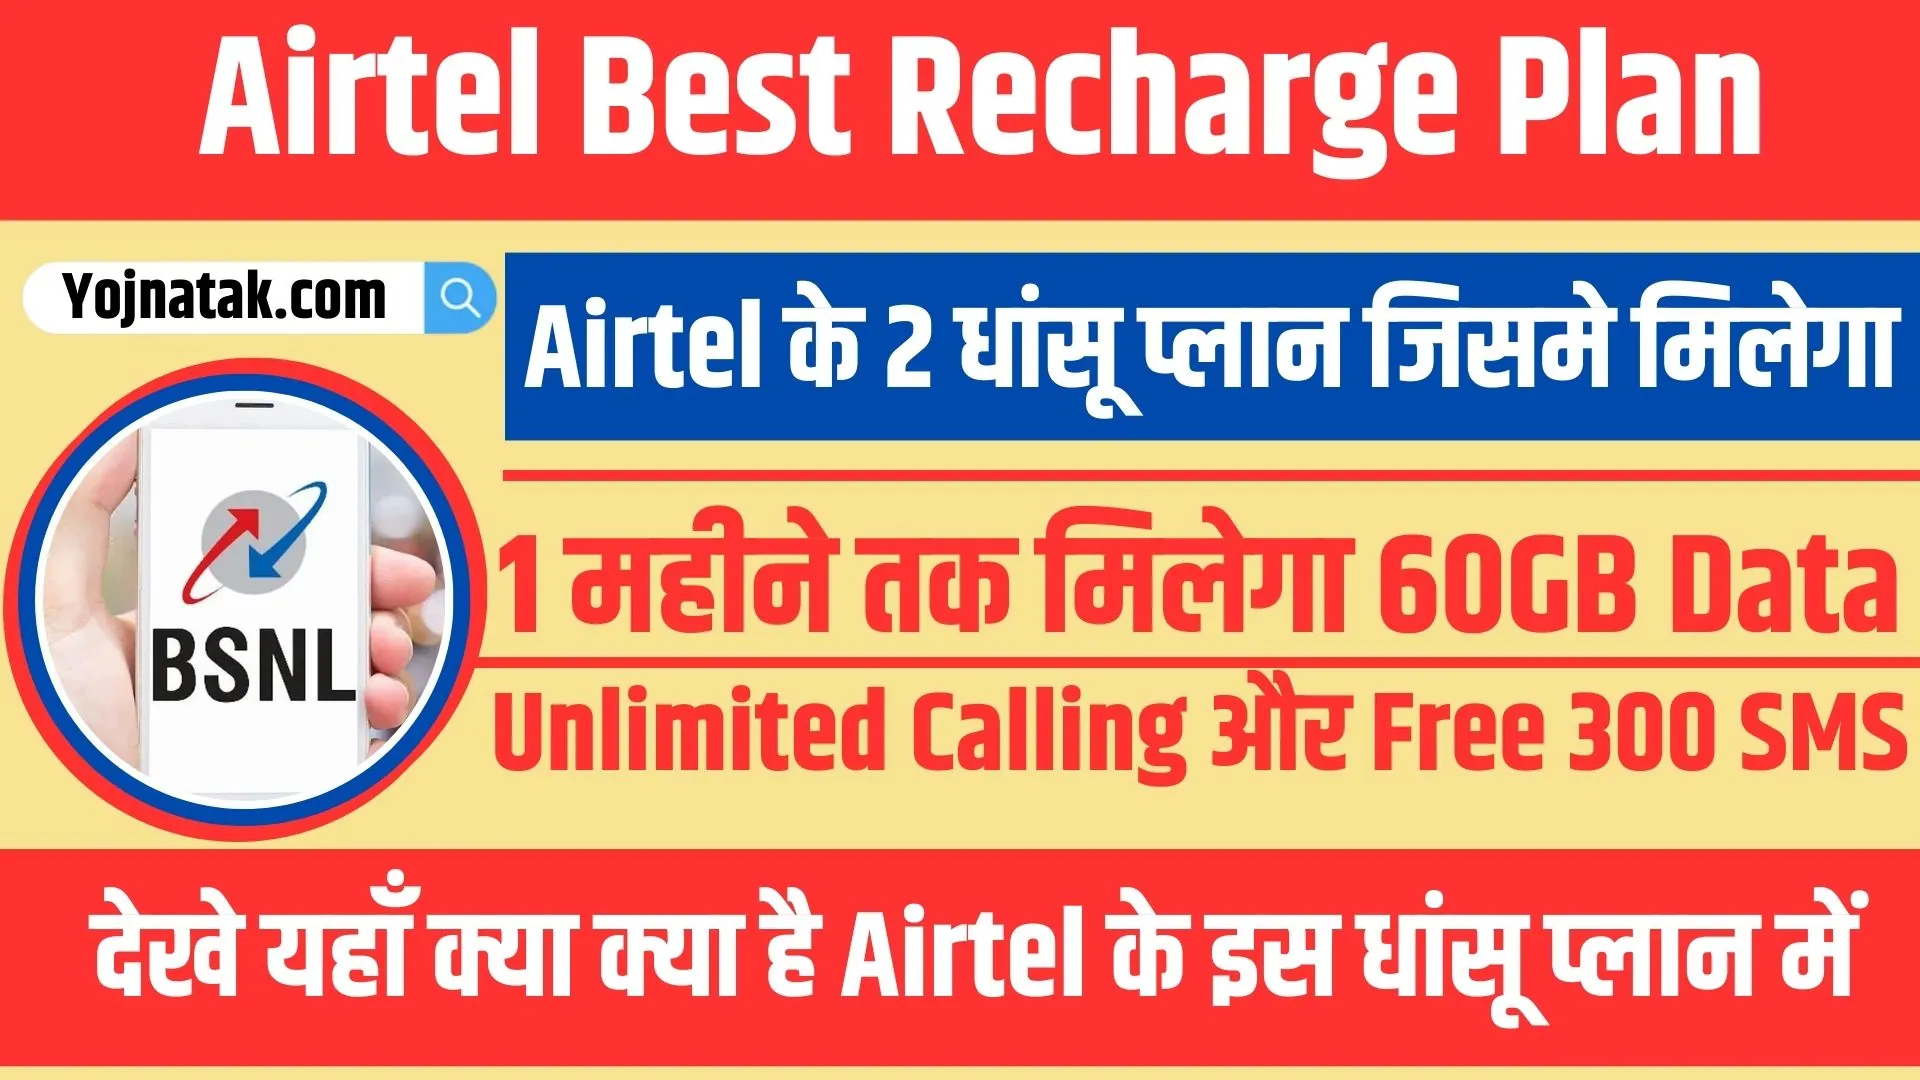 Airtel Best Recharge Plan,Airtel Recharge Plan, recharge plan list, recharge plan prepaid, recharge plan details